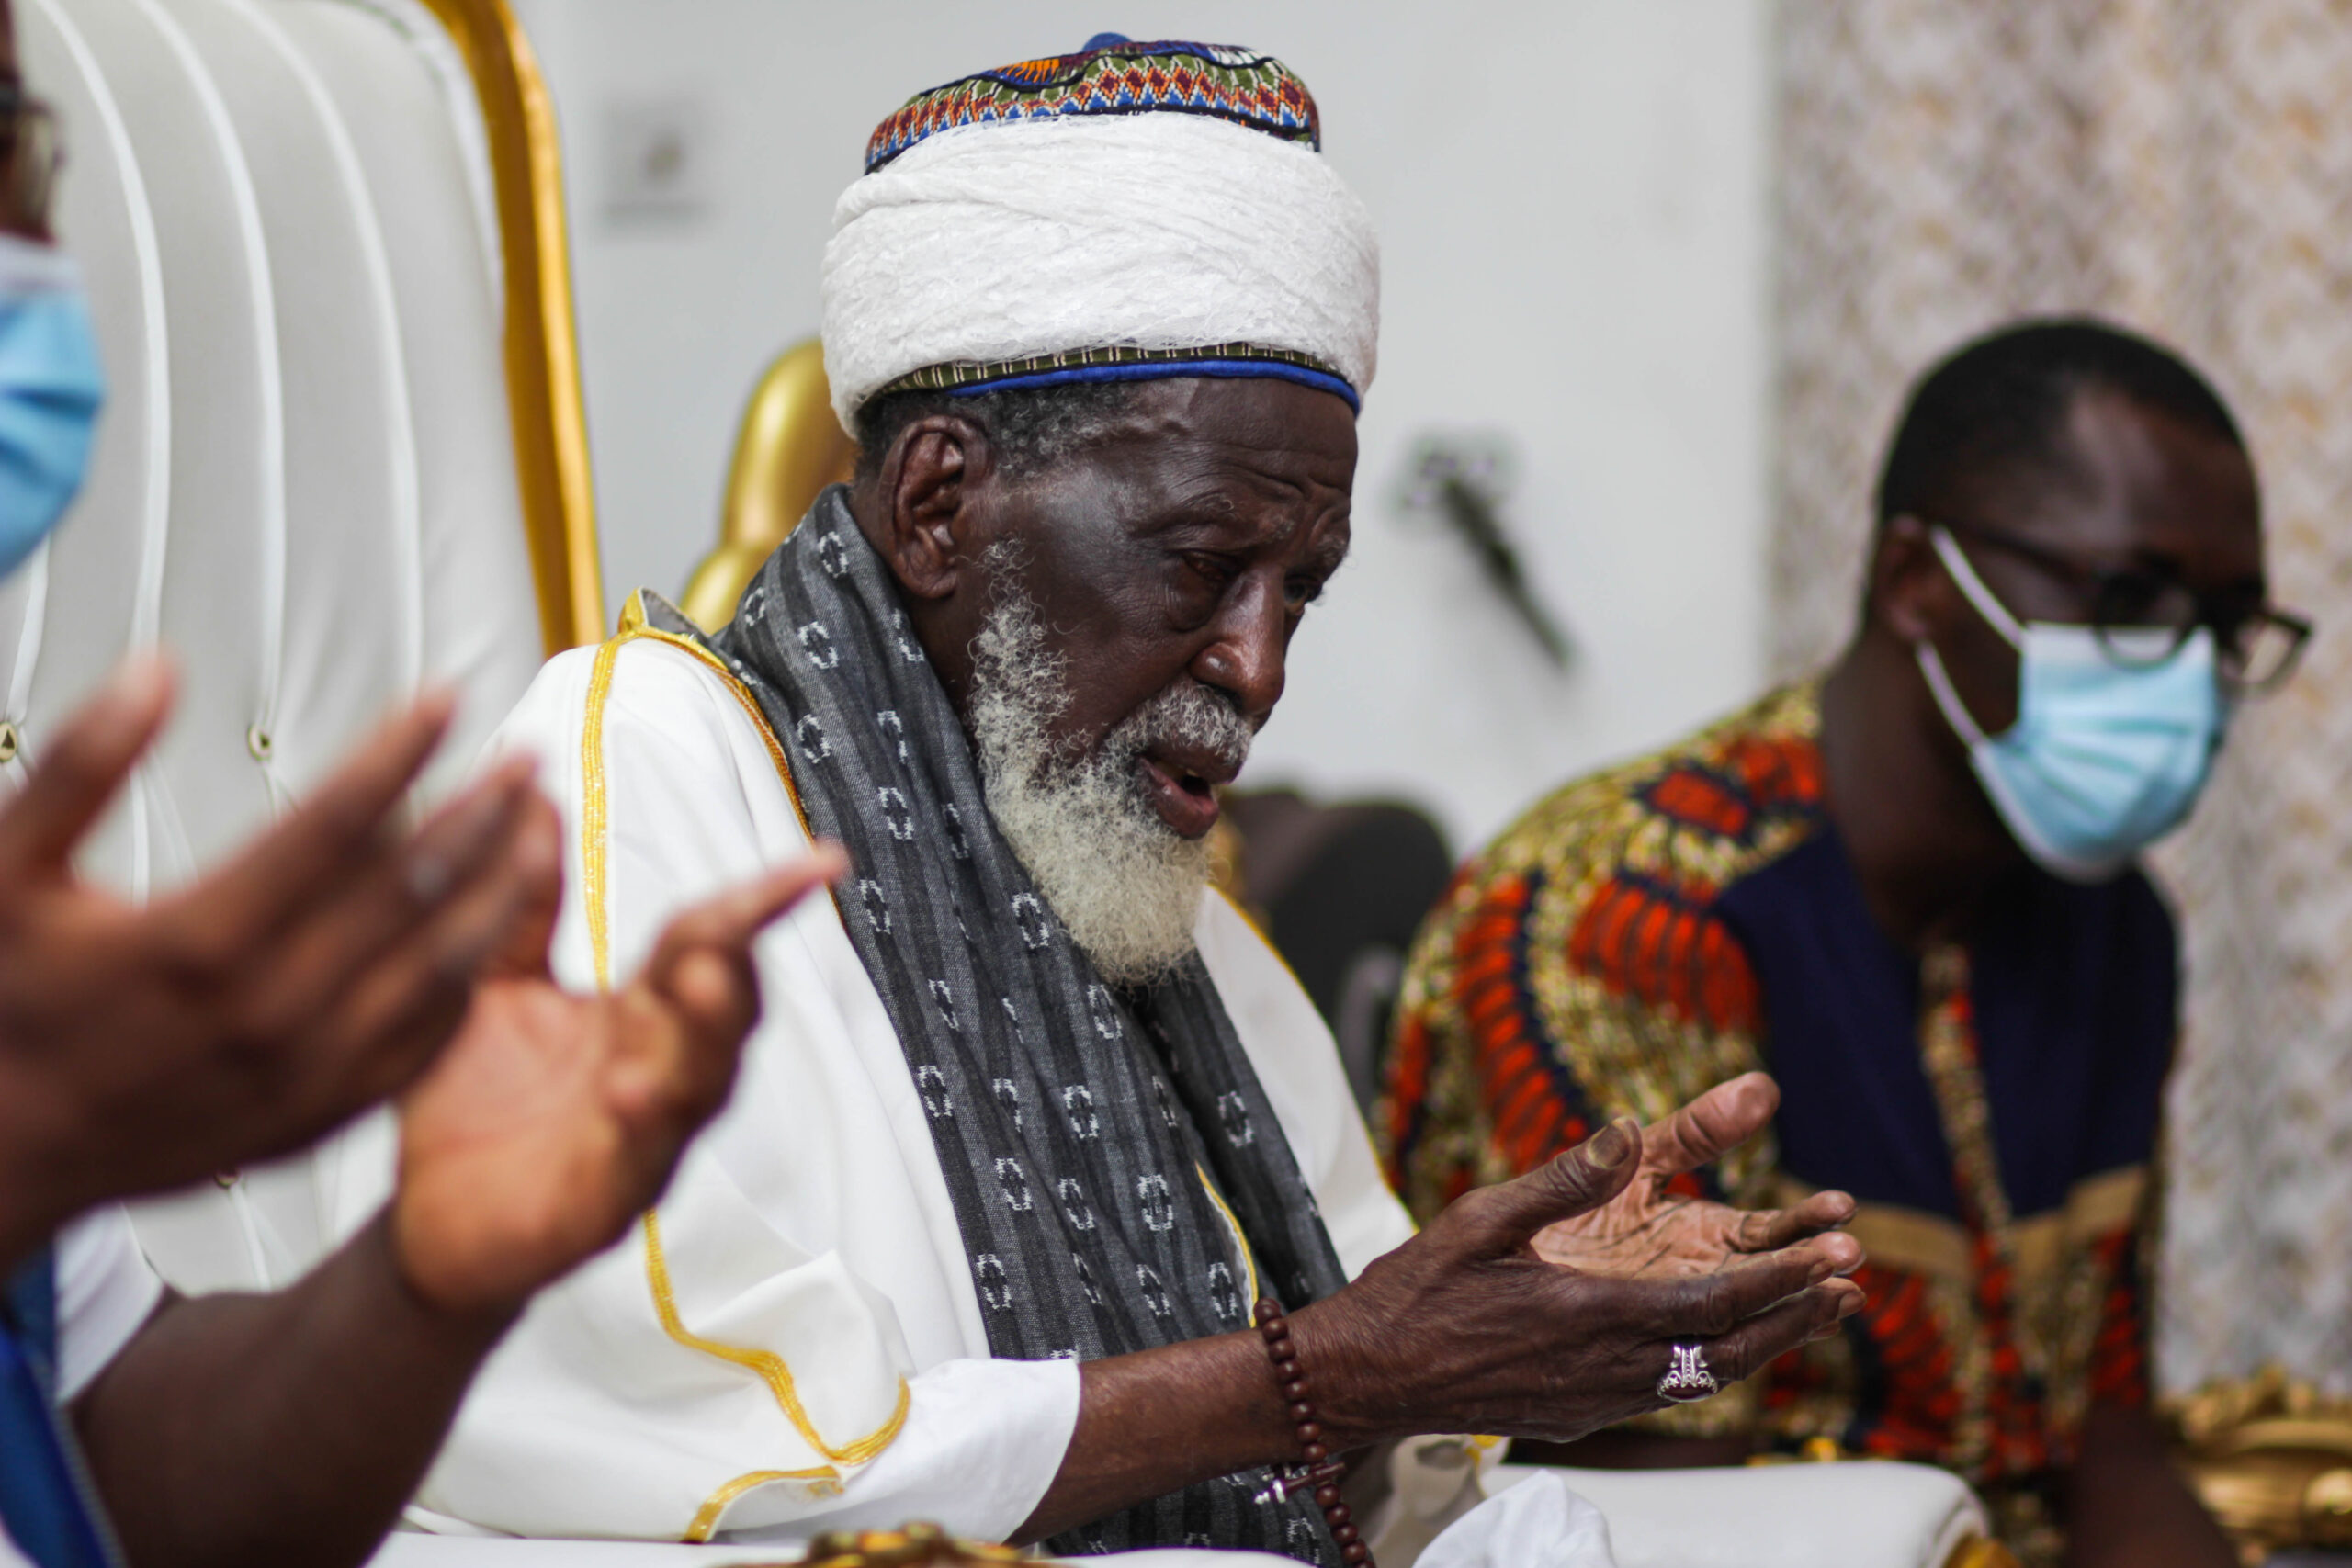 Ramadan “Feed The Ummah” Project Team Calls On the National Chief Imam